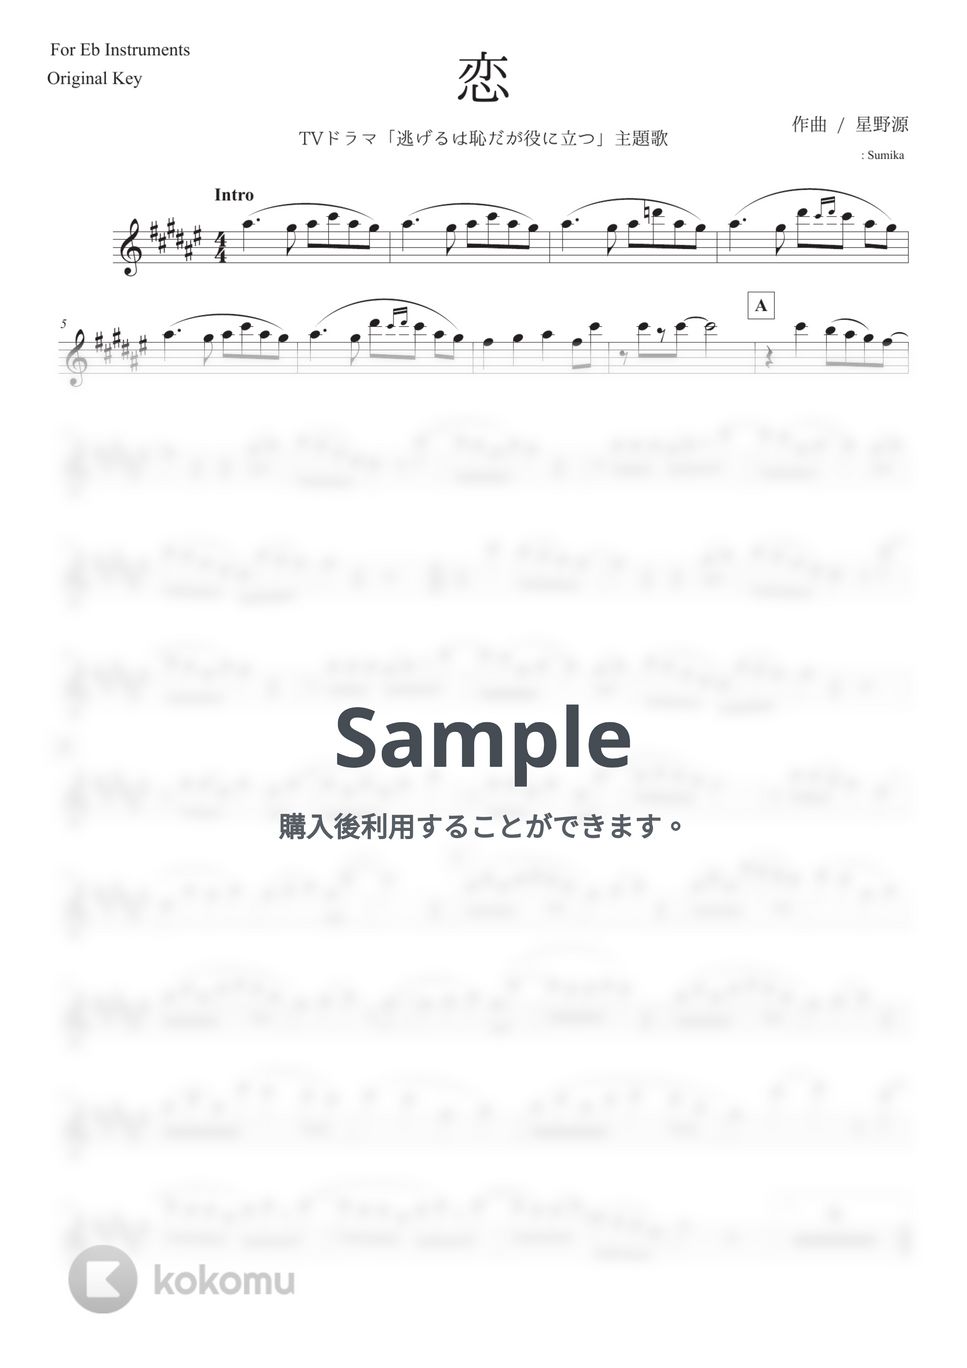 星野源 - 恋 (in Eb / Original Key) by Sumika